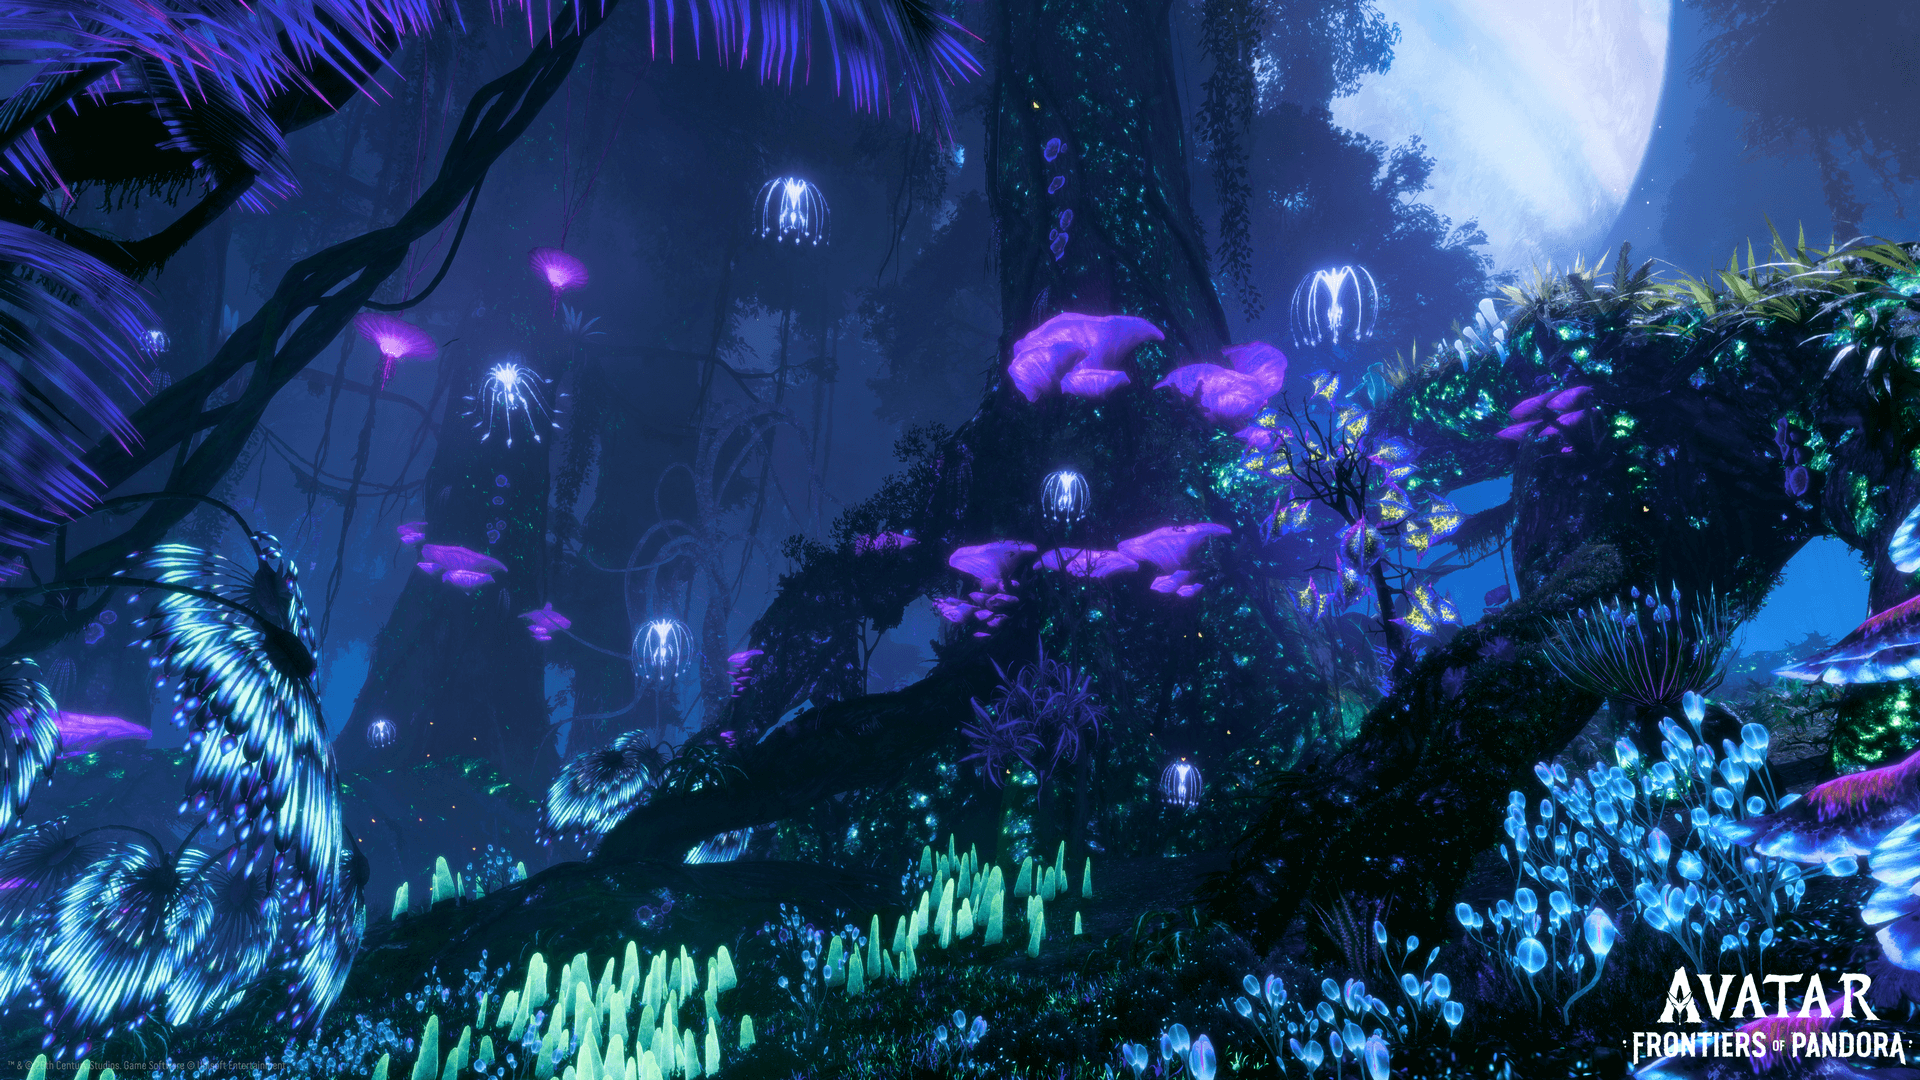 Avatar Frontiers of Pandora (2)